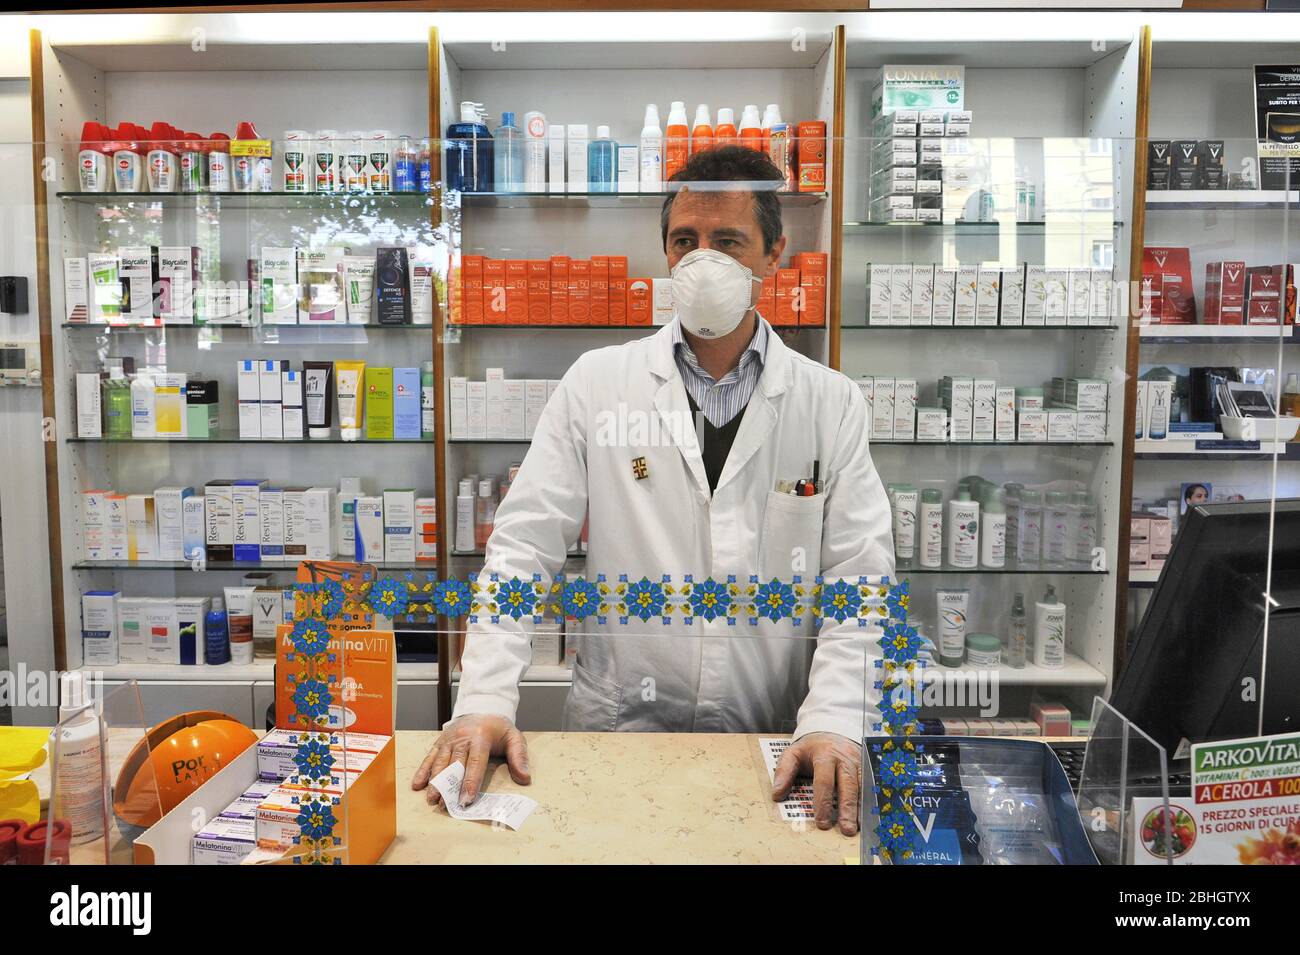 Coronavirus epidemic, live with the mask, the pharmacy, Milan, April 2020 Stock Photo